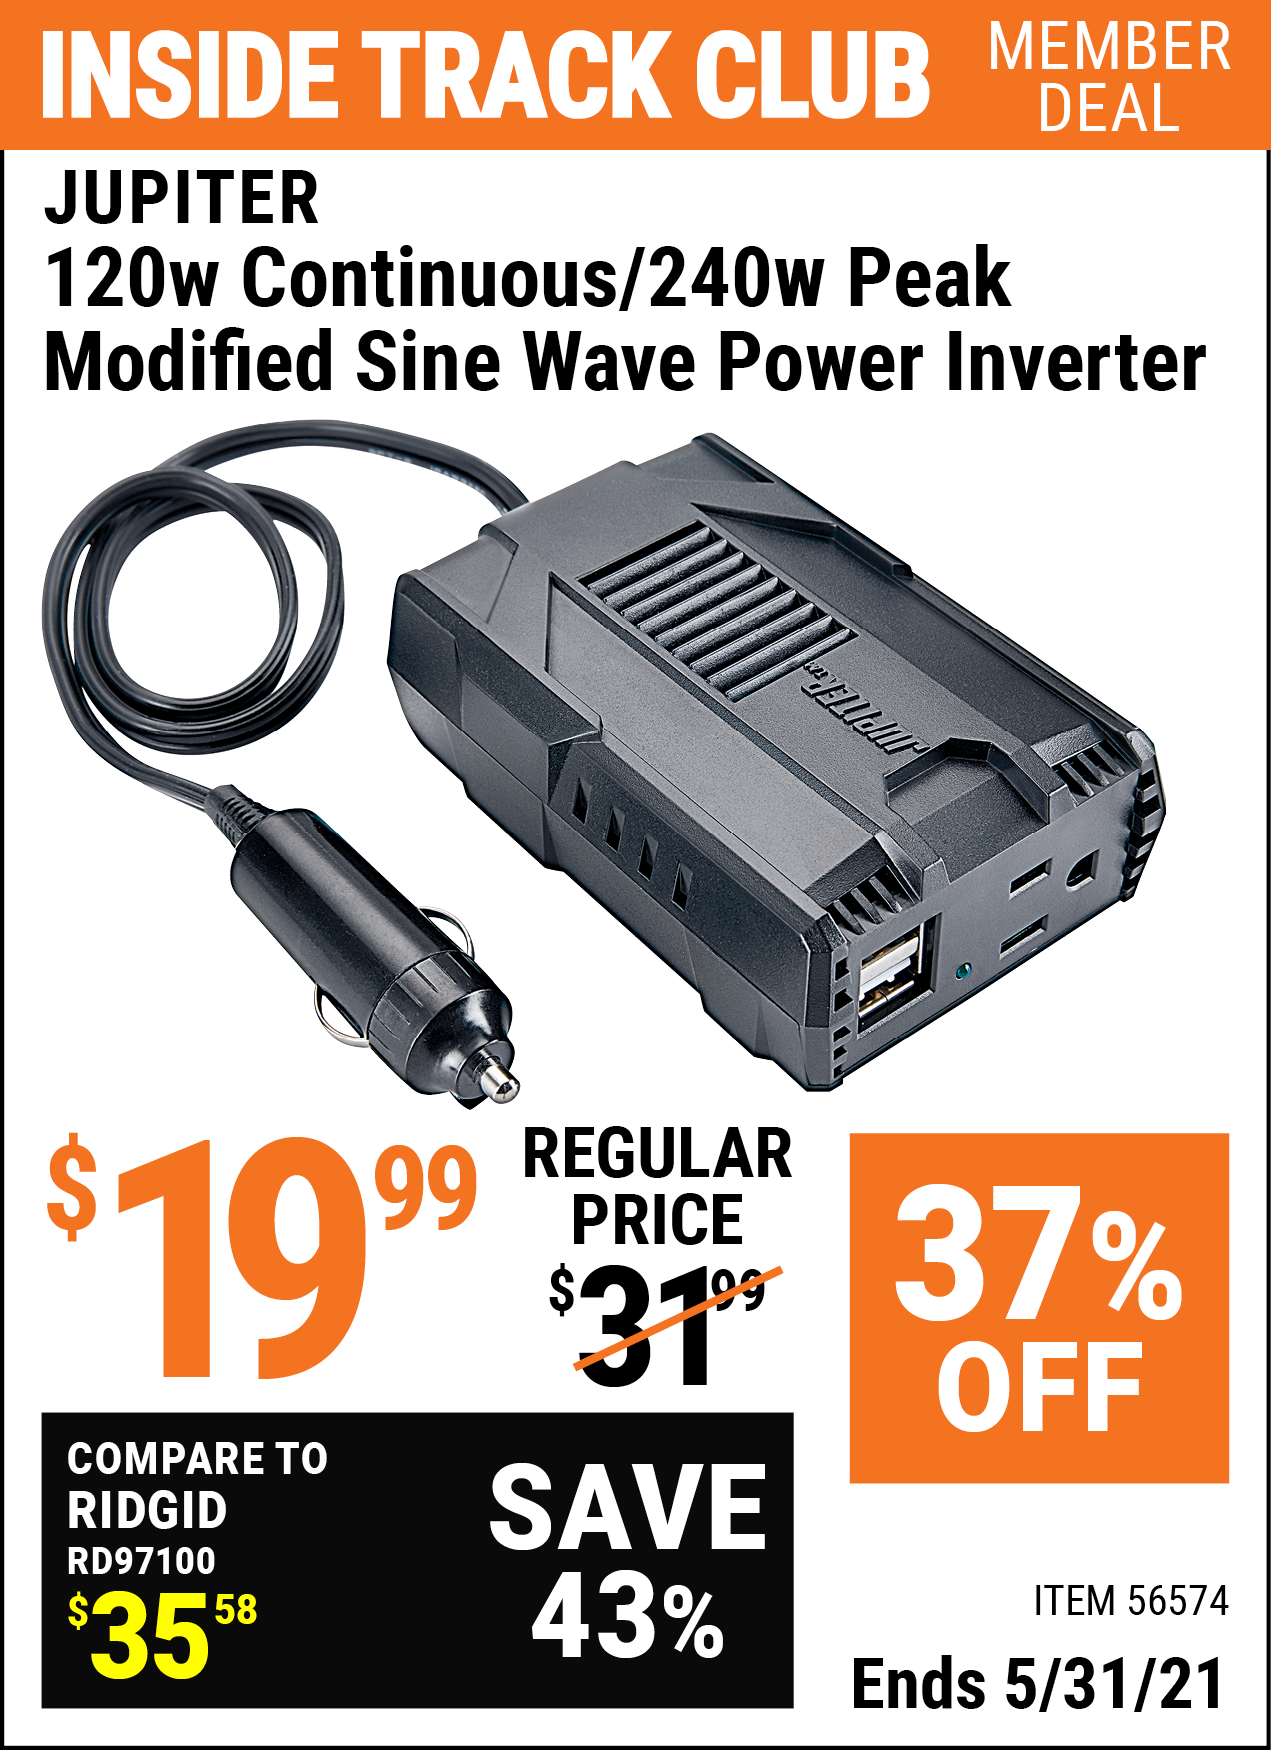 Inside Track Club members can buy the JUPITER 120 Watt Continuous/240 Watt Peak Modified Sine Wave Power Inverter (Item 56574) for $19.99, valid through 5/31/2021.